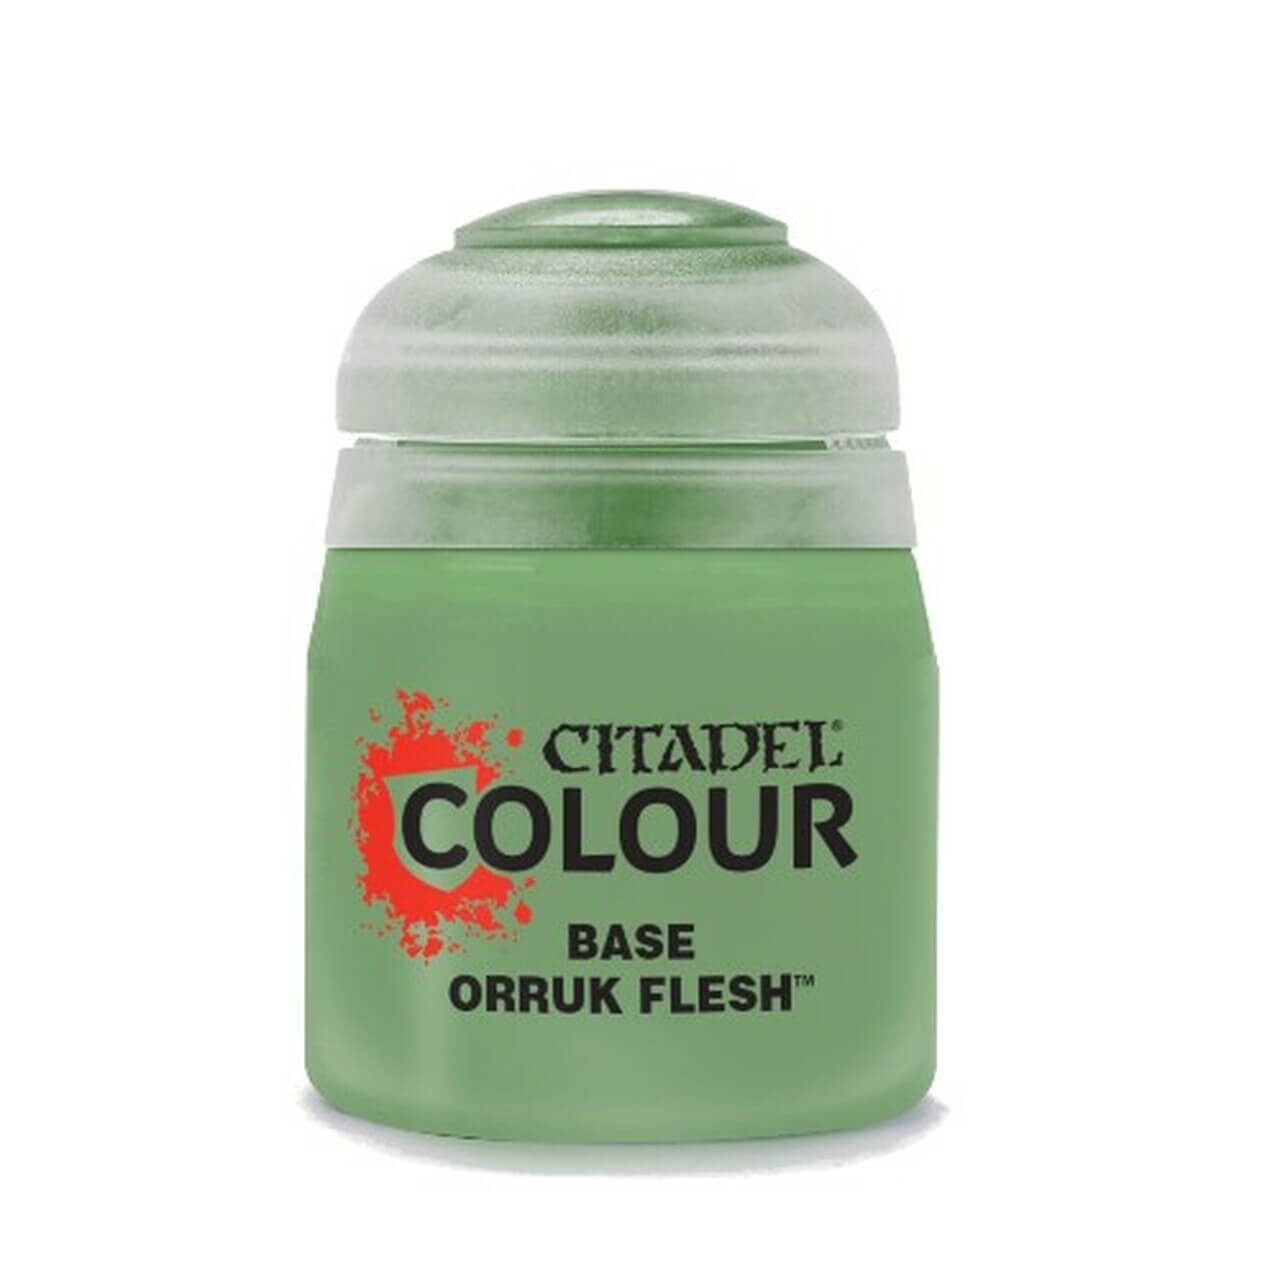 Citadel Colour Base Paint Orruk Flesh (12ml)